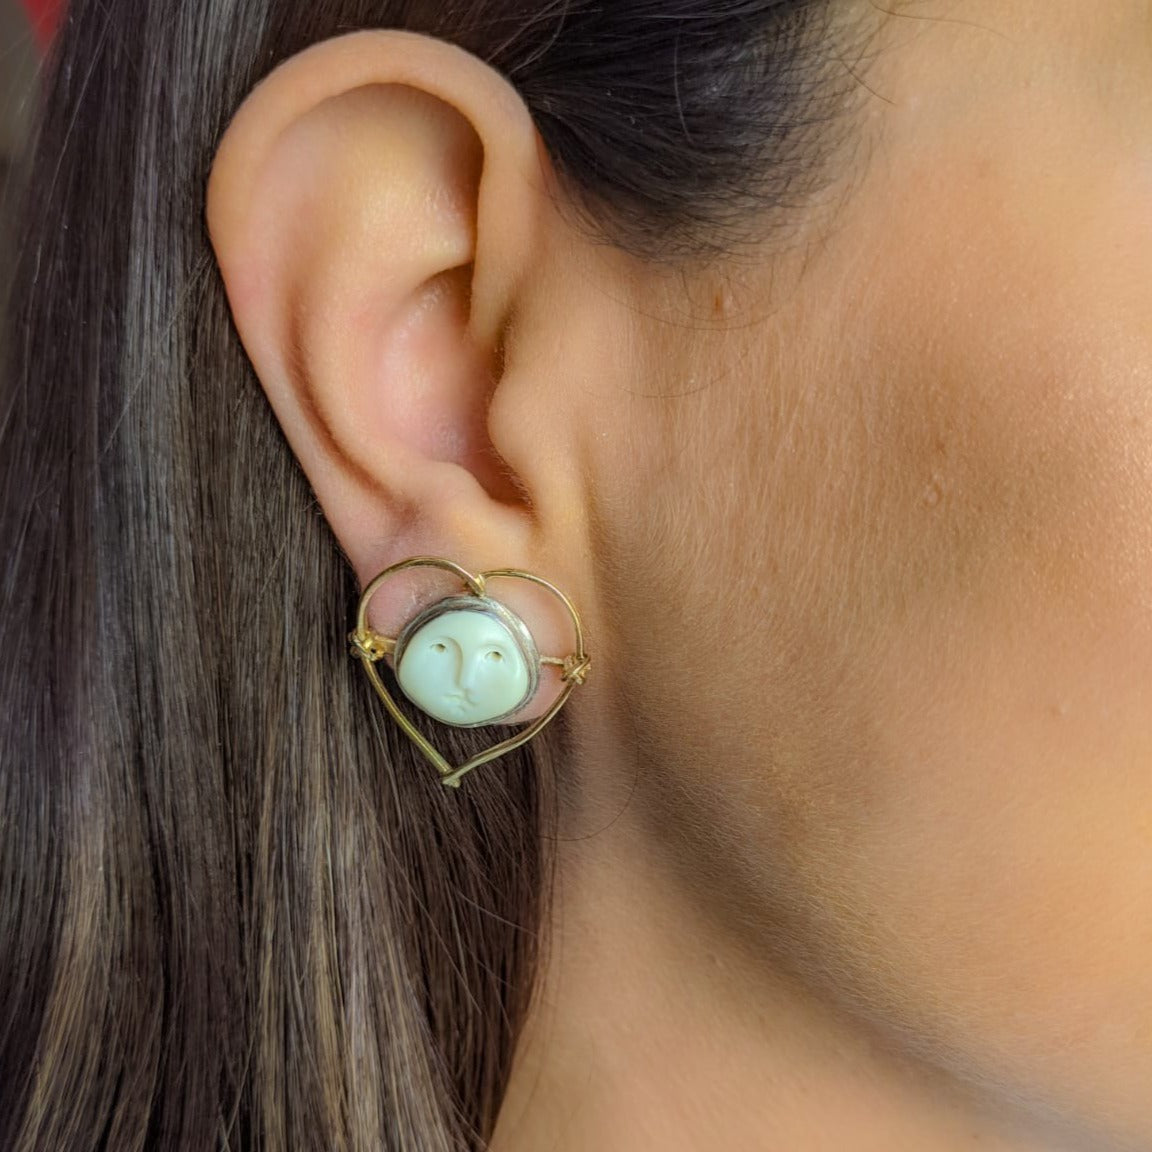 Caroline Morris Bach Hand Crafted Bone Moon Face earrings